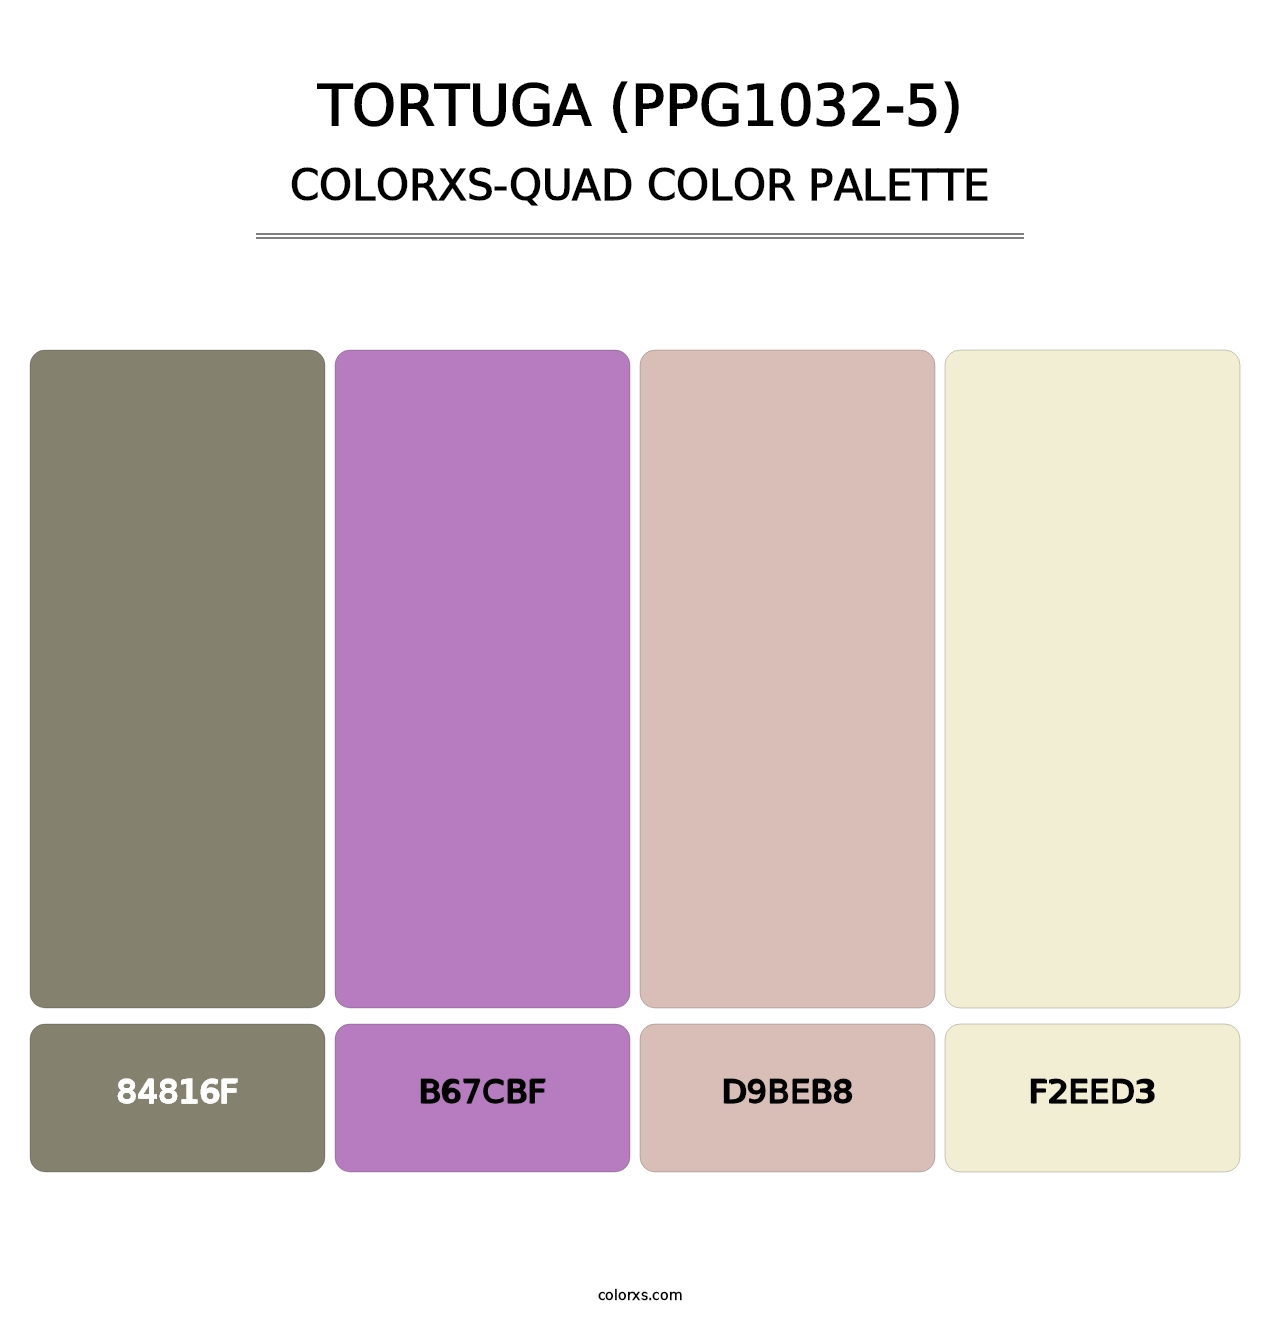 Tortuga (PPG1032-5) - Colorxs Quad Palette